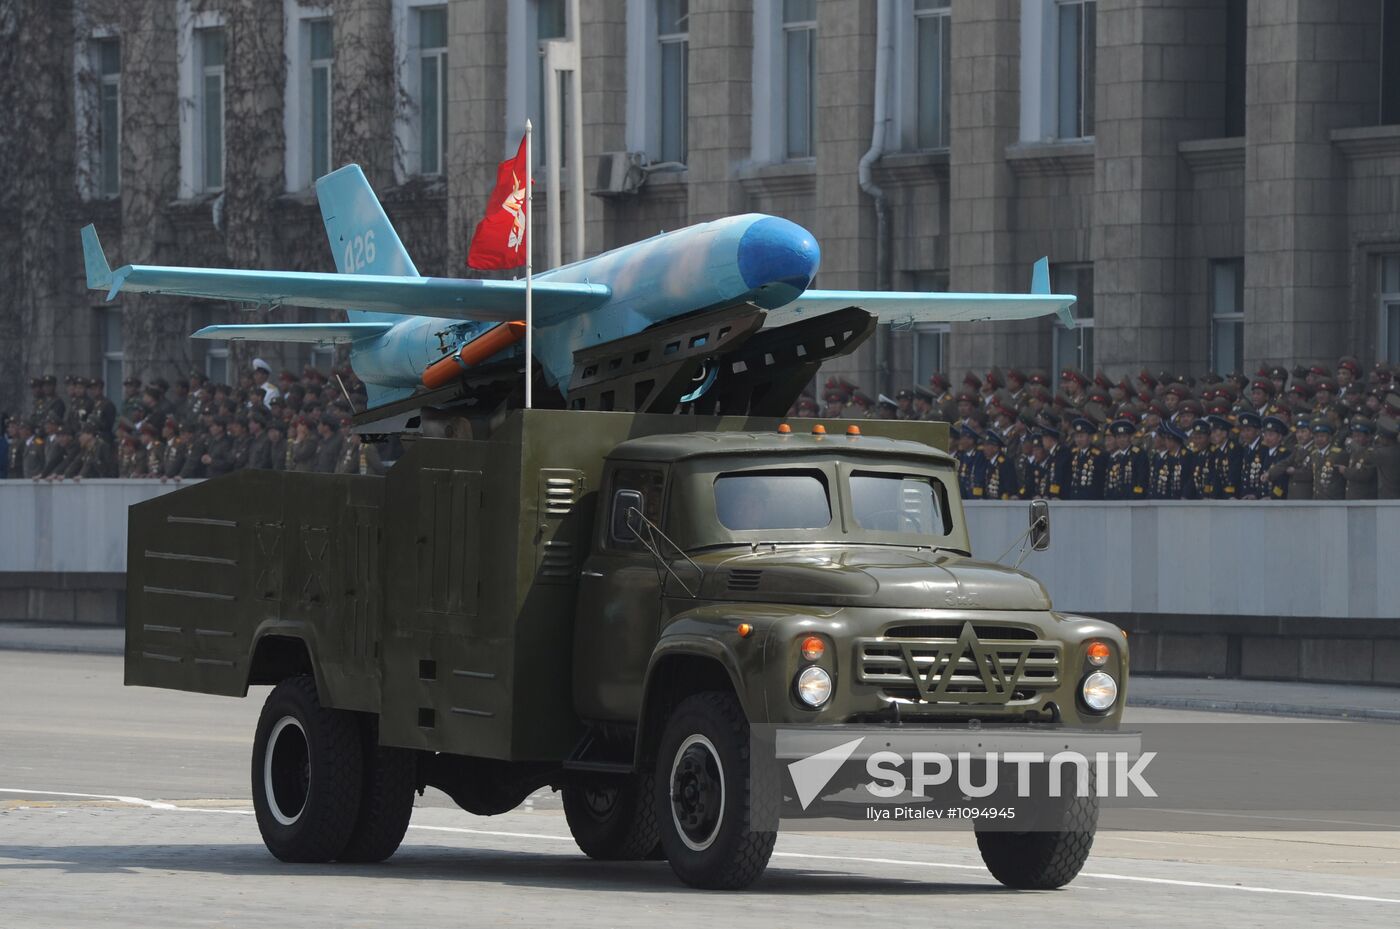 Military parade marks Kim Il-sung's 100th birthday